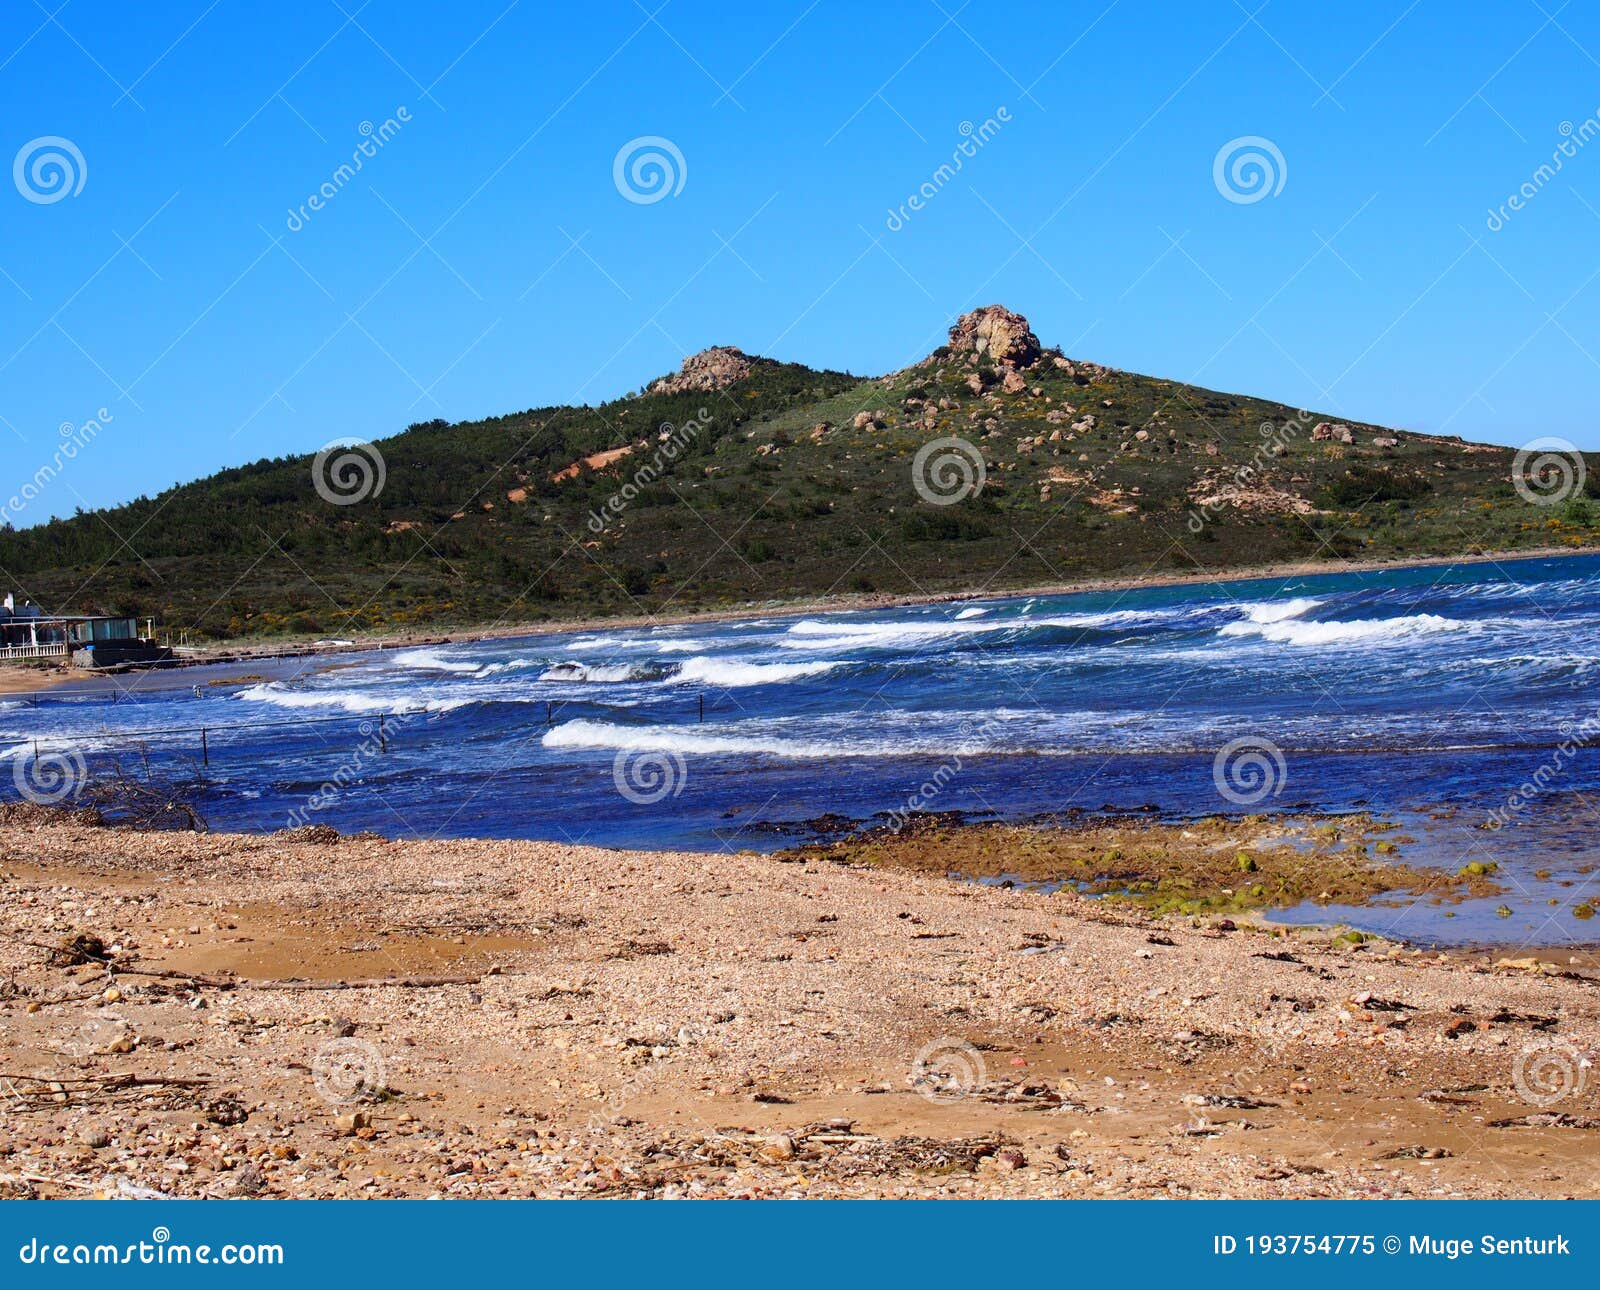 cunda, alibey island cataltepe beach, ayvalÃÂ±k, balÃÂ±kesir, turkey